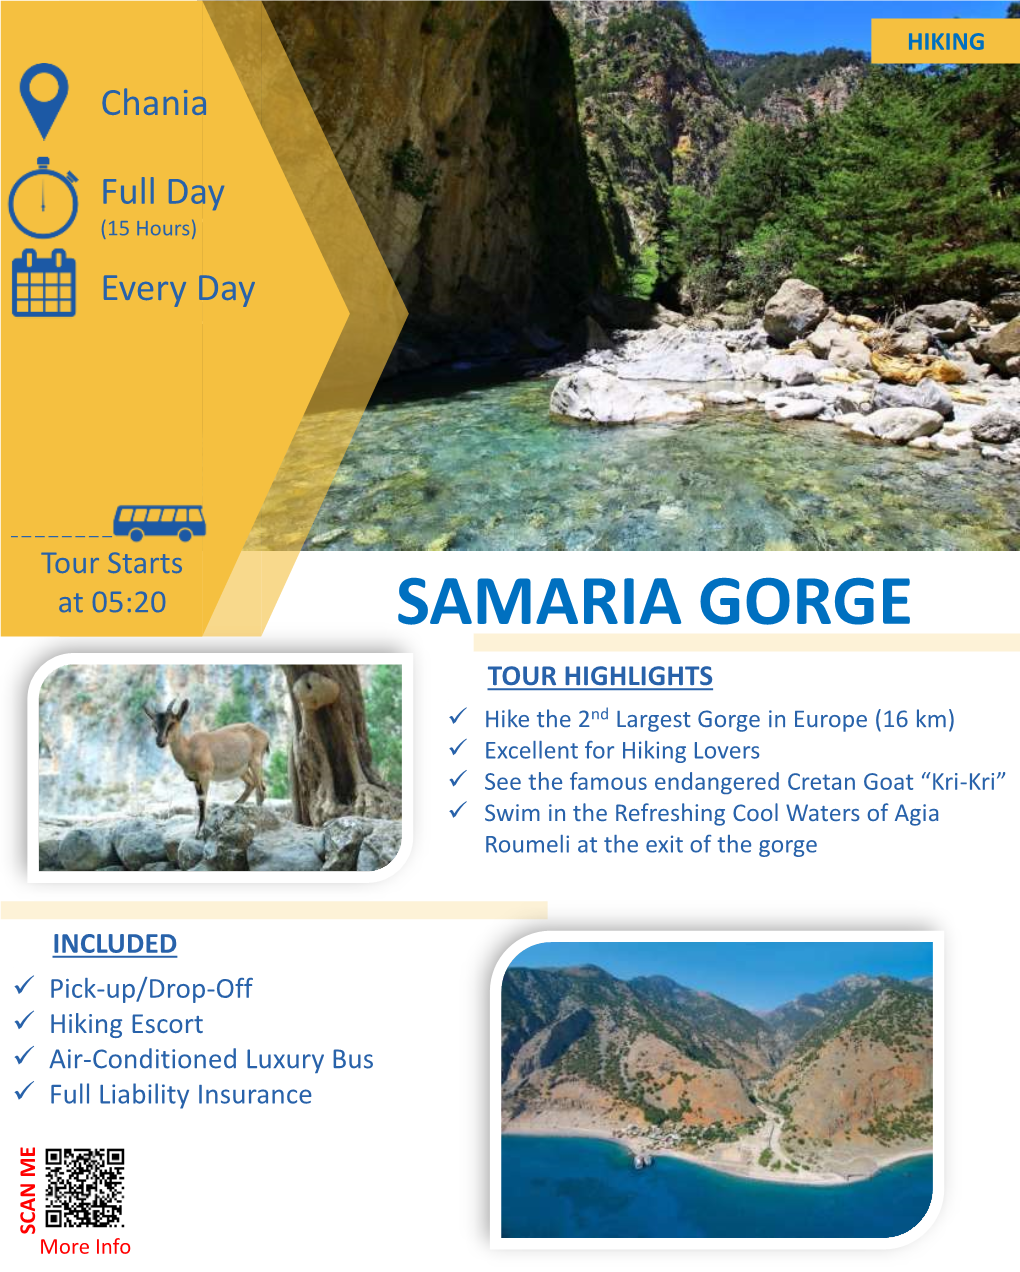 Samaria Gorge Tour Highlights